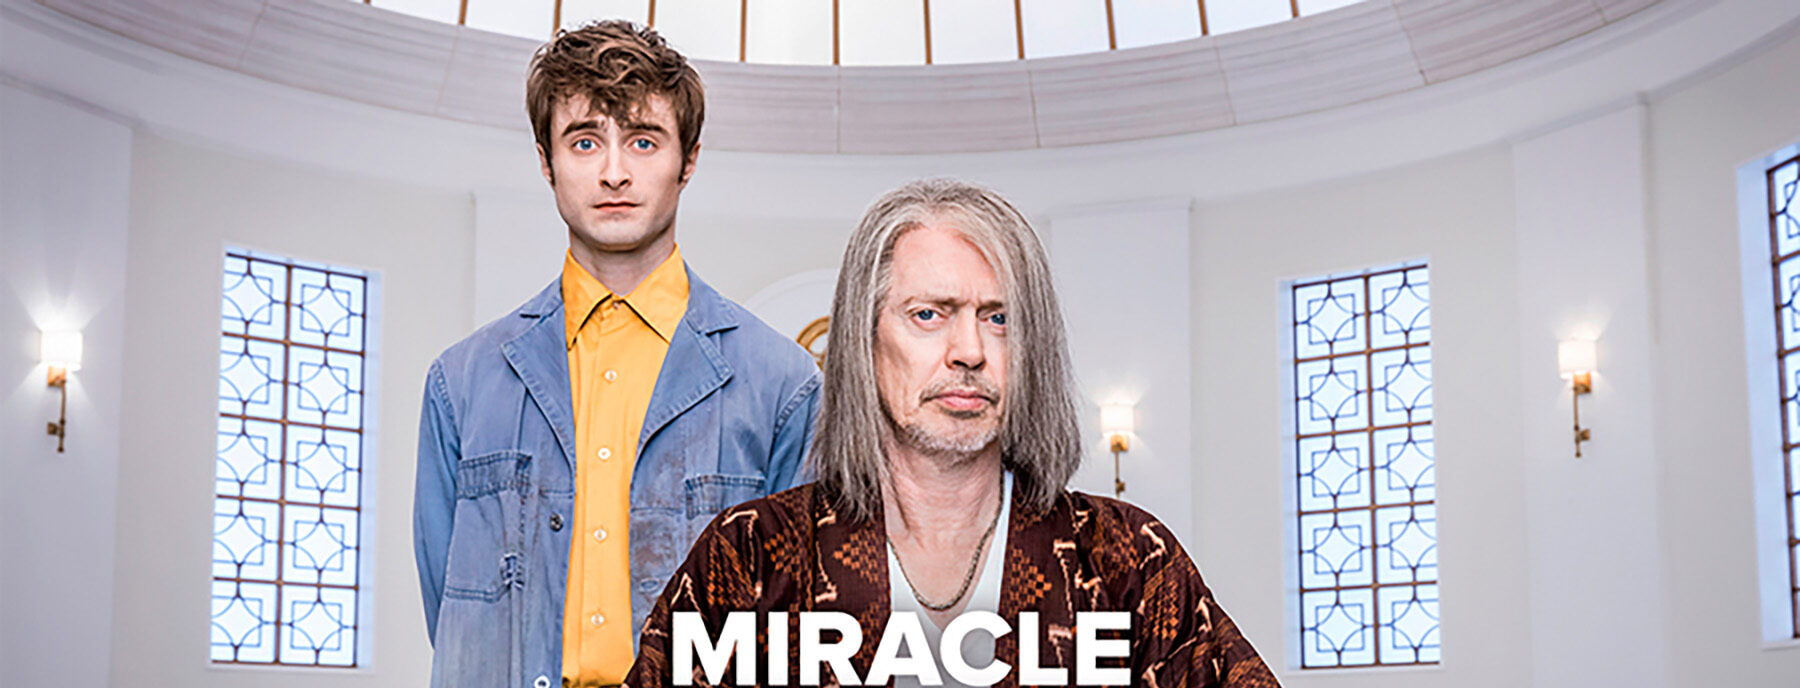 ‘Miracle Workers’ la serie con Daniel Radcliffe, Steve Buscemi, Geraldine Viswanathan y Karan Soni